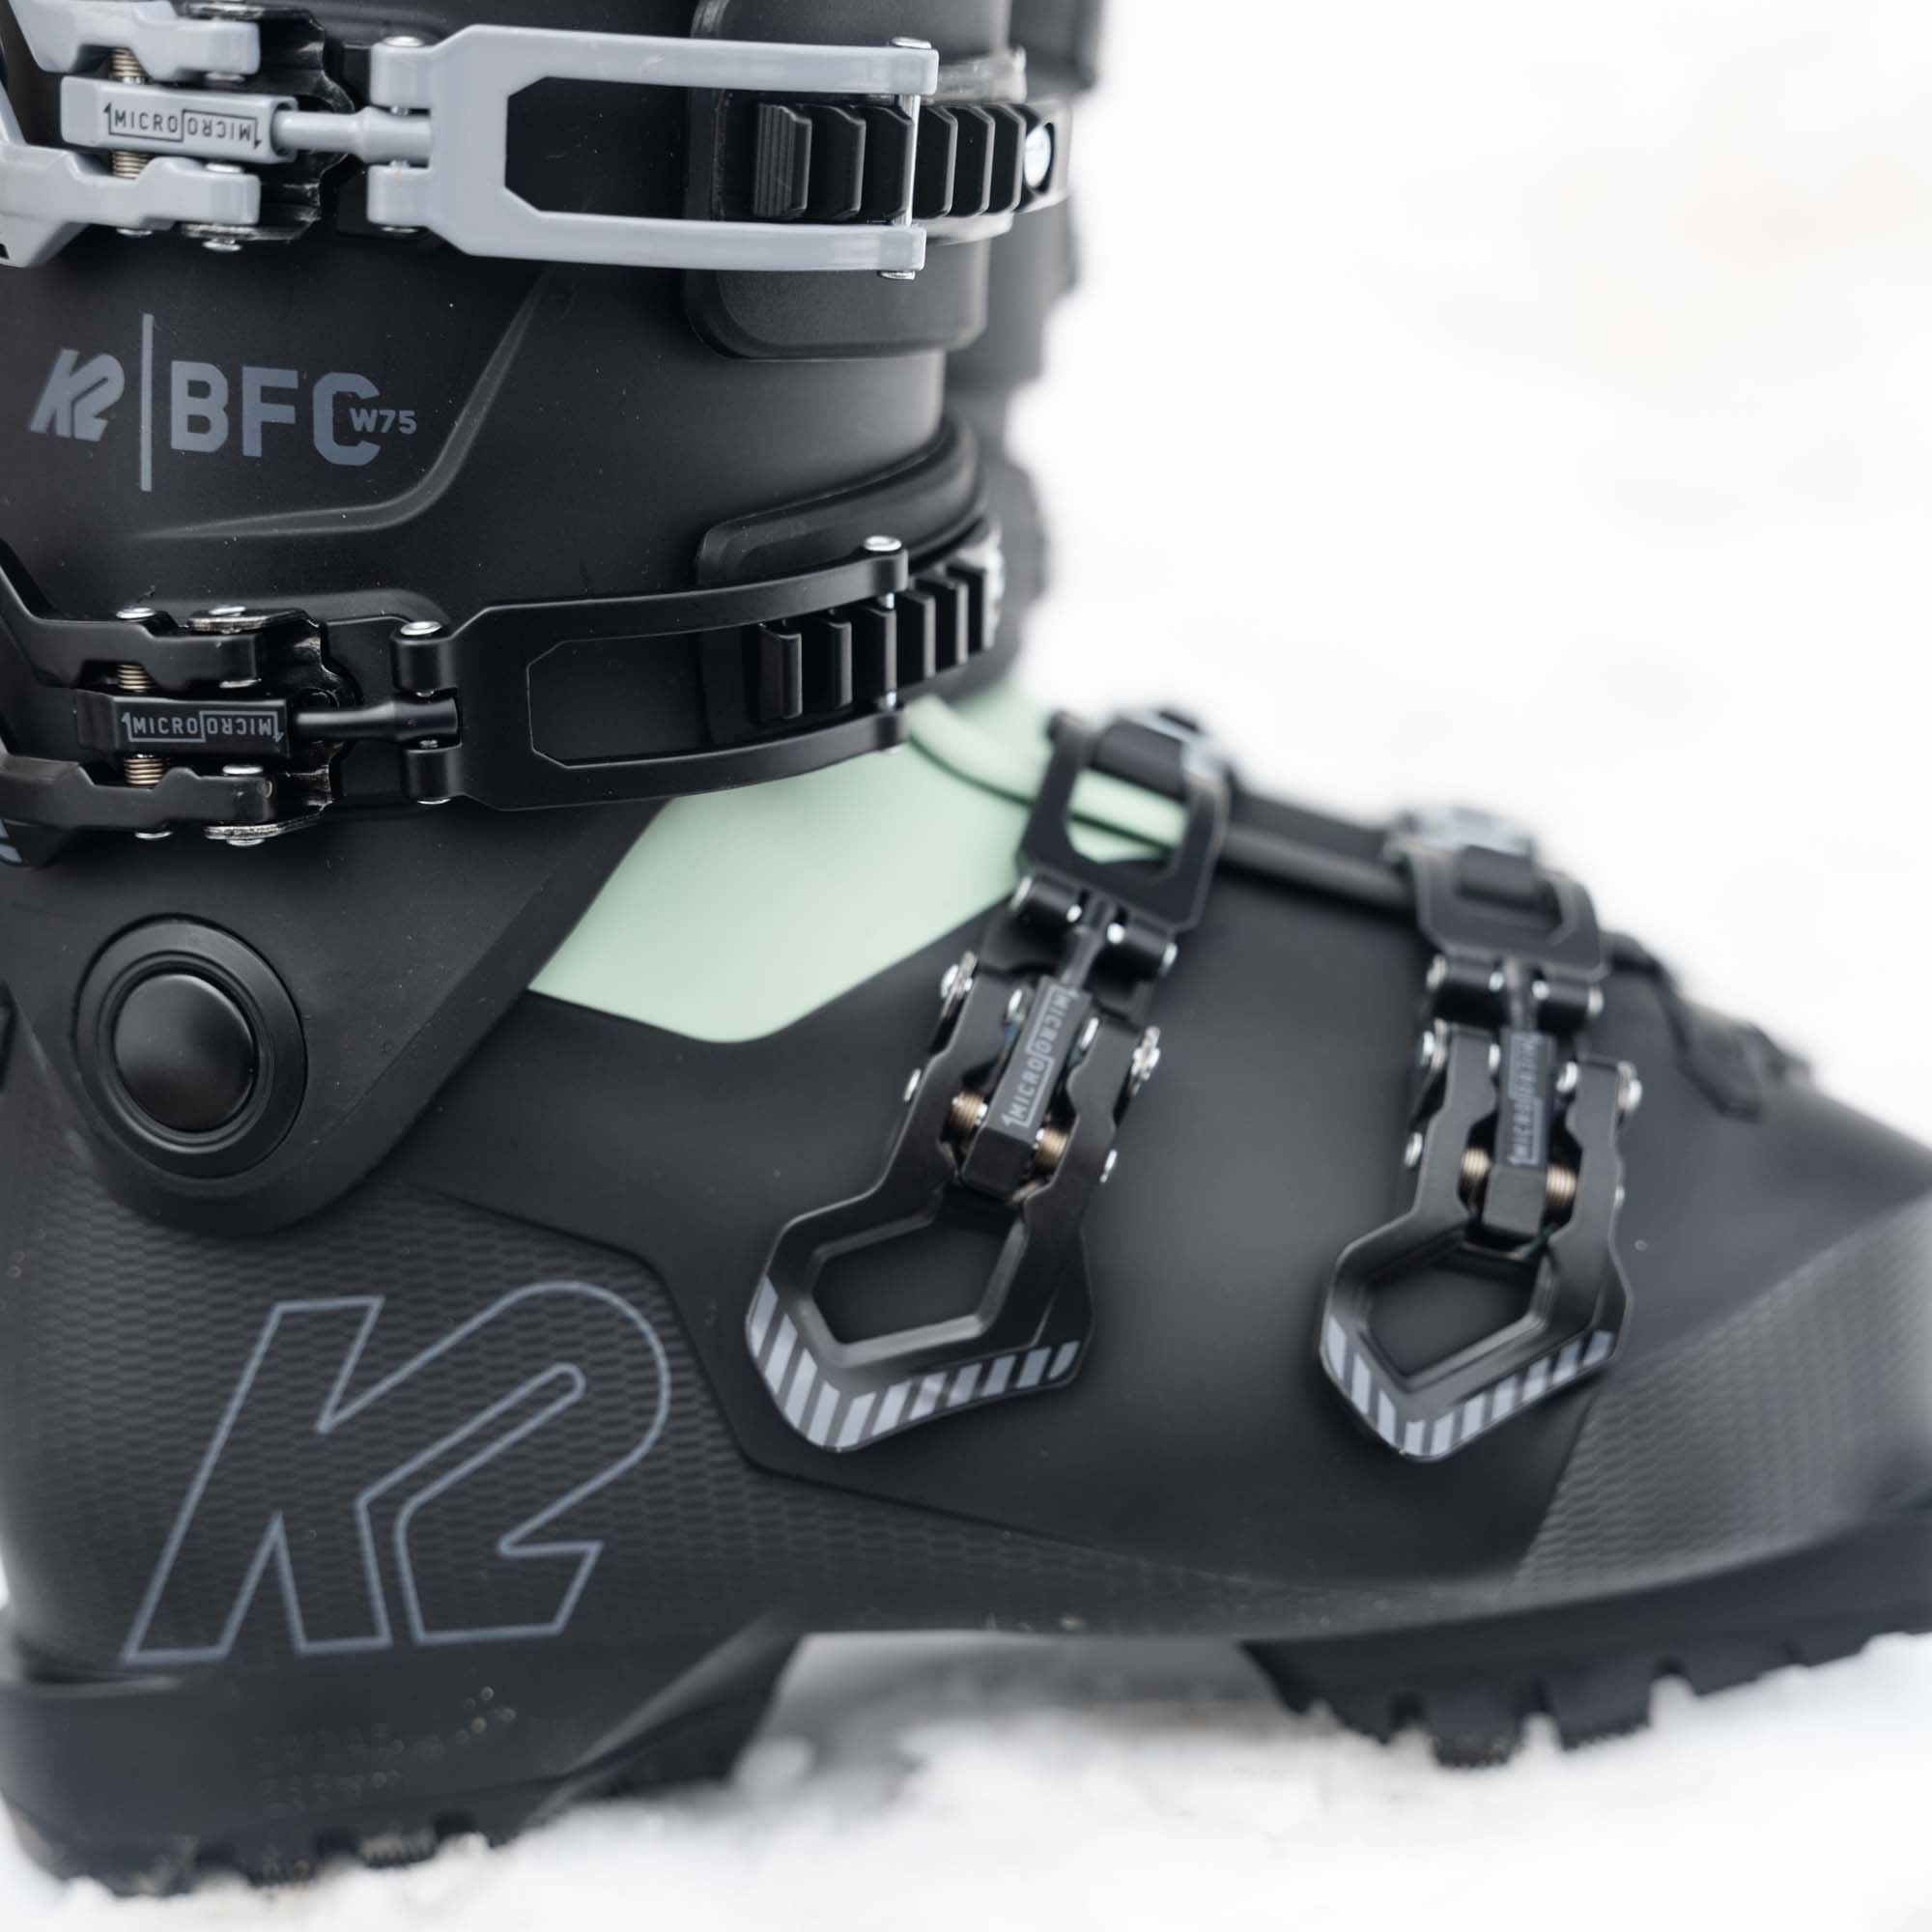 K2 BFC W 75 GripWalk Women's Ski Boot